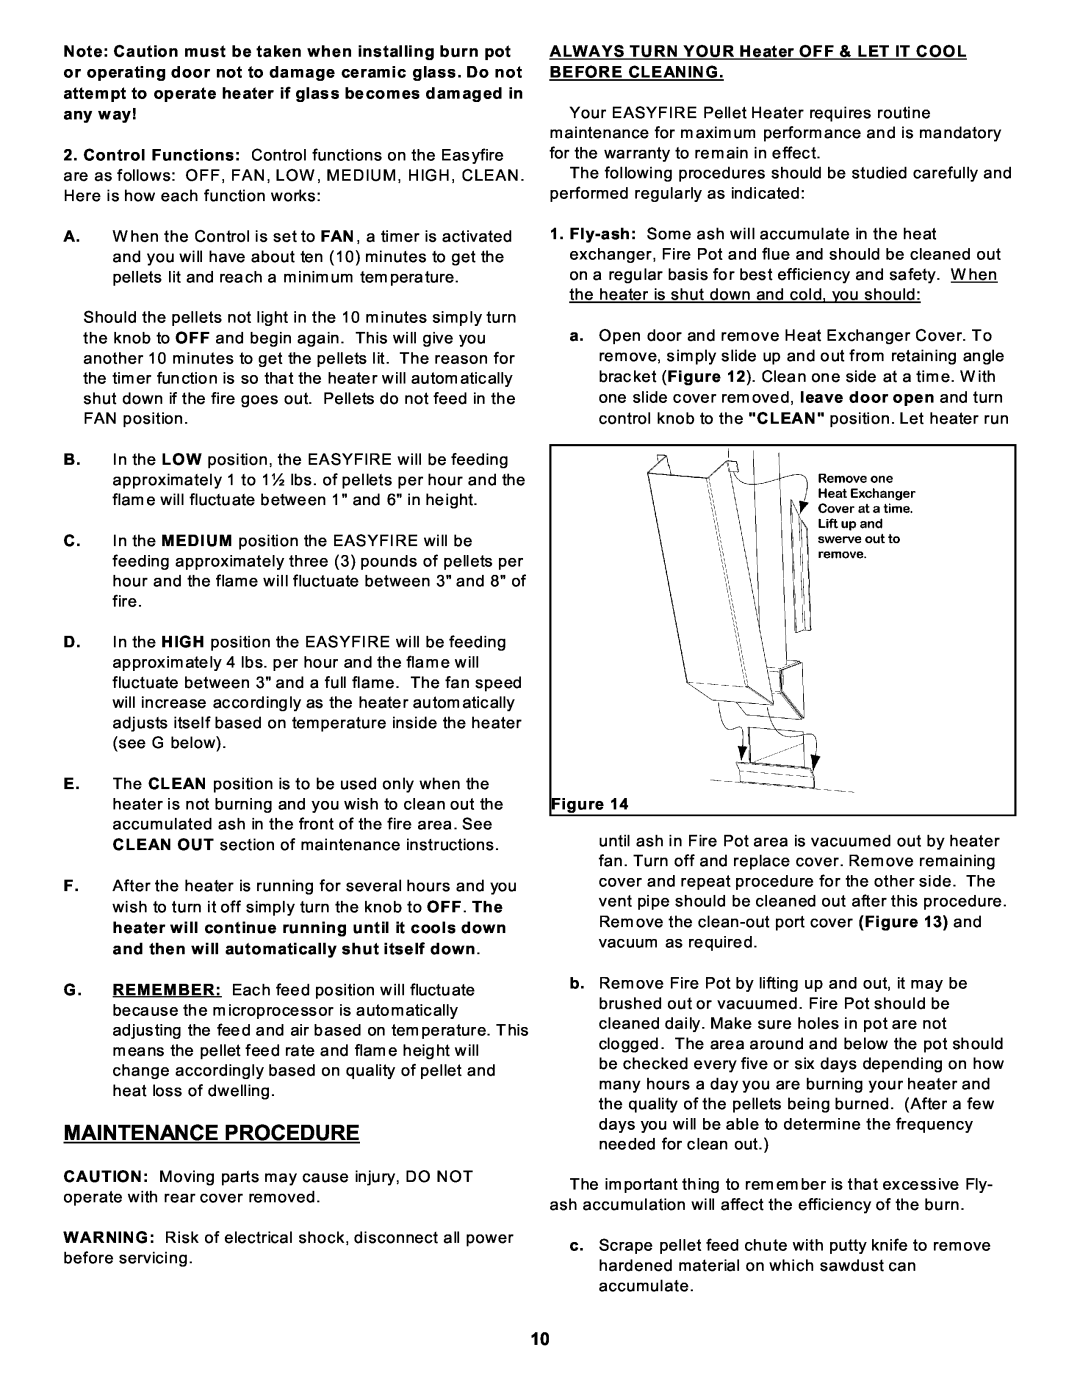 Sierra Products EF-4001B operating instructions Maintenance Procedure 